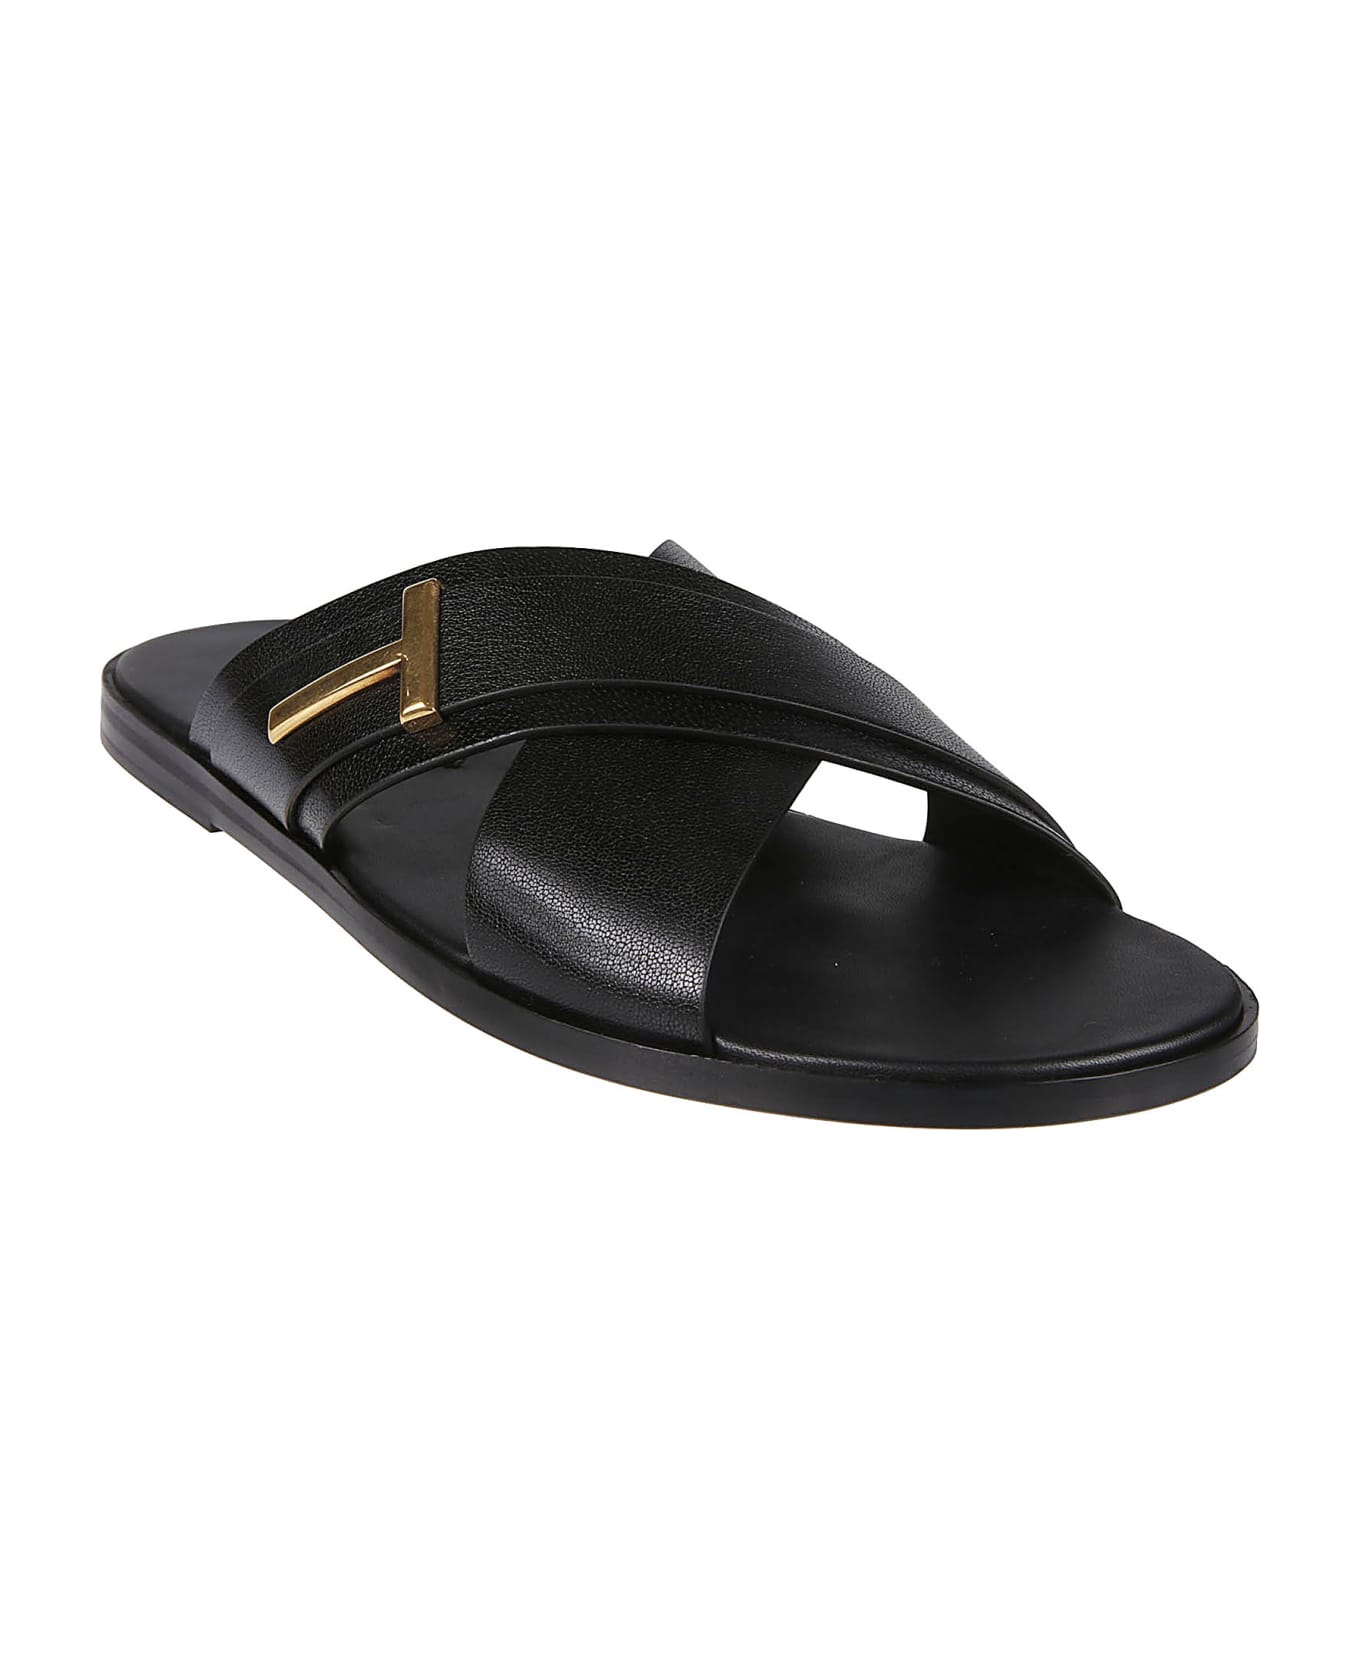 Tom Ford Leather Sandals - Black